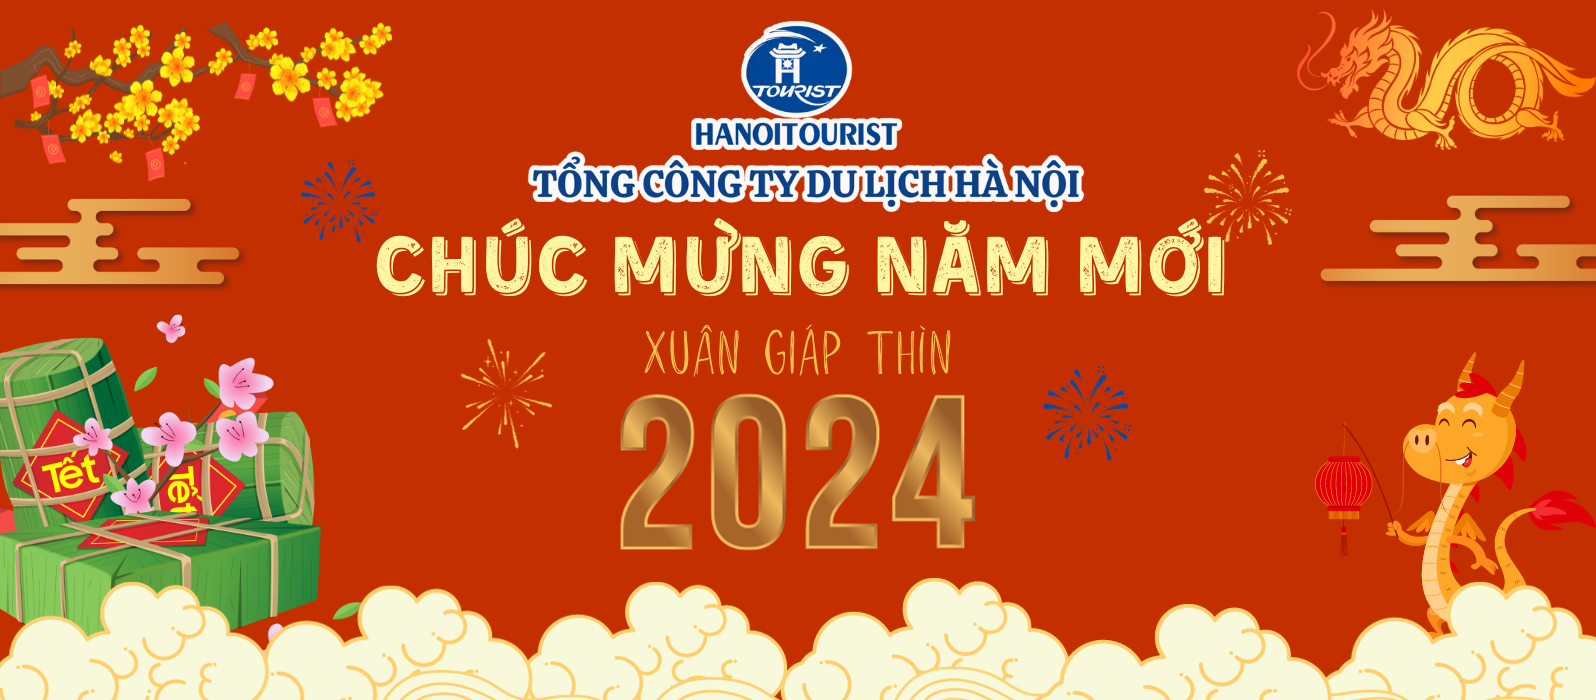 CHUC MUNG NAM MOI 2024